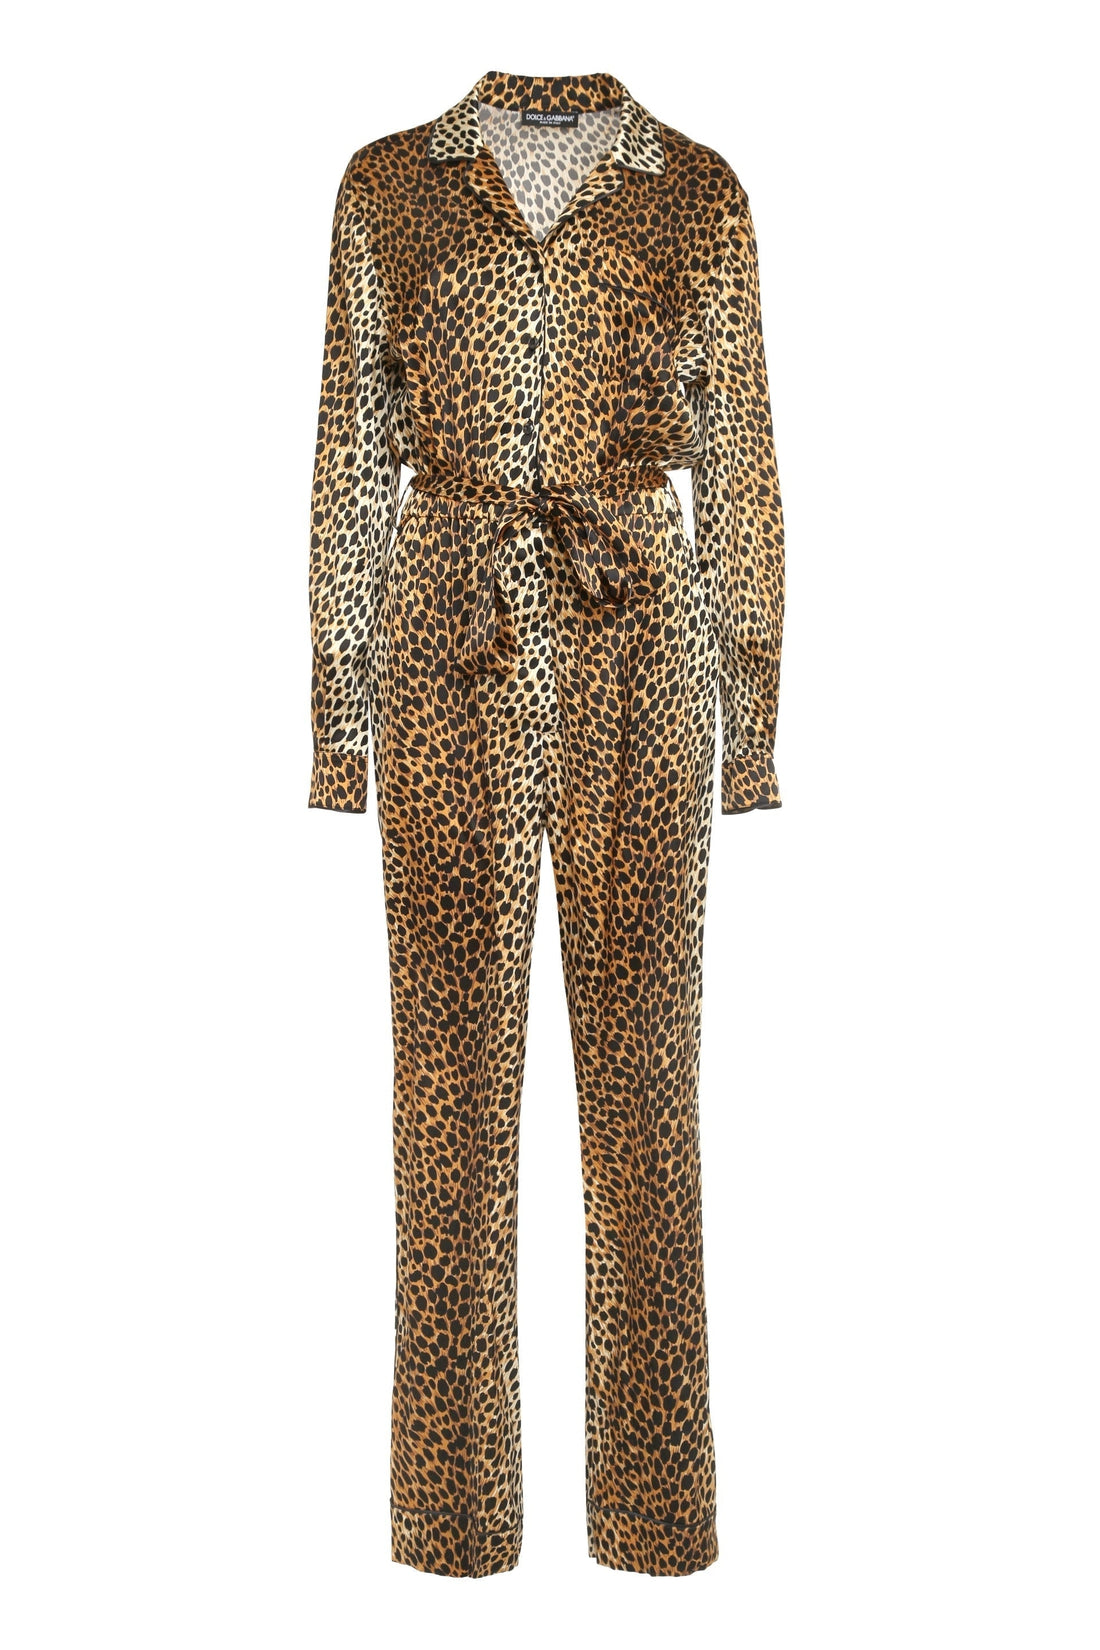 Dolce & Gabbana-OUTLET-SALE-Printed silk jumpsuit-ARCHIVIST